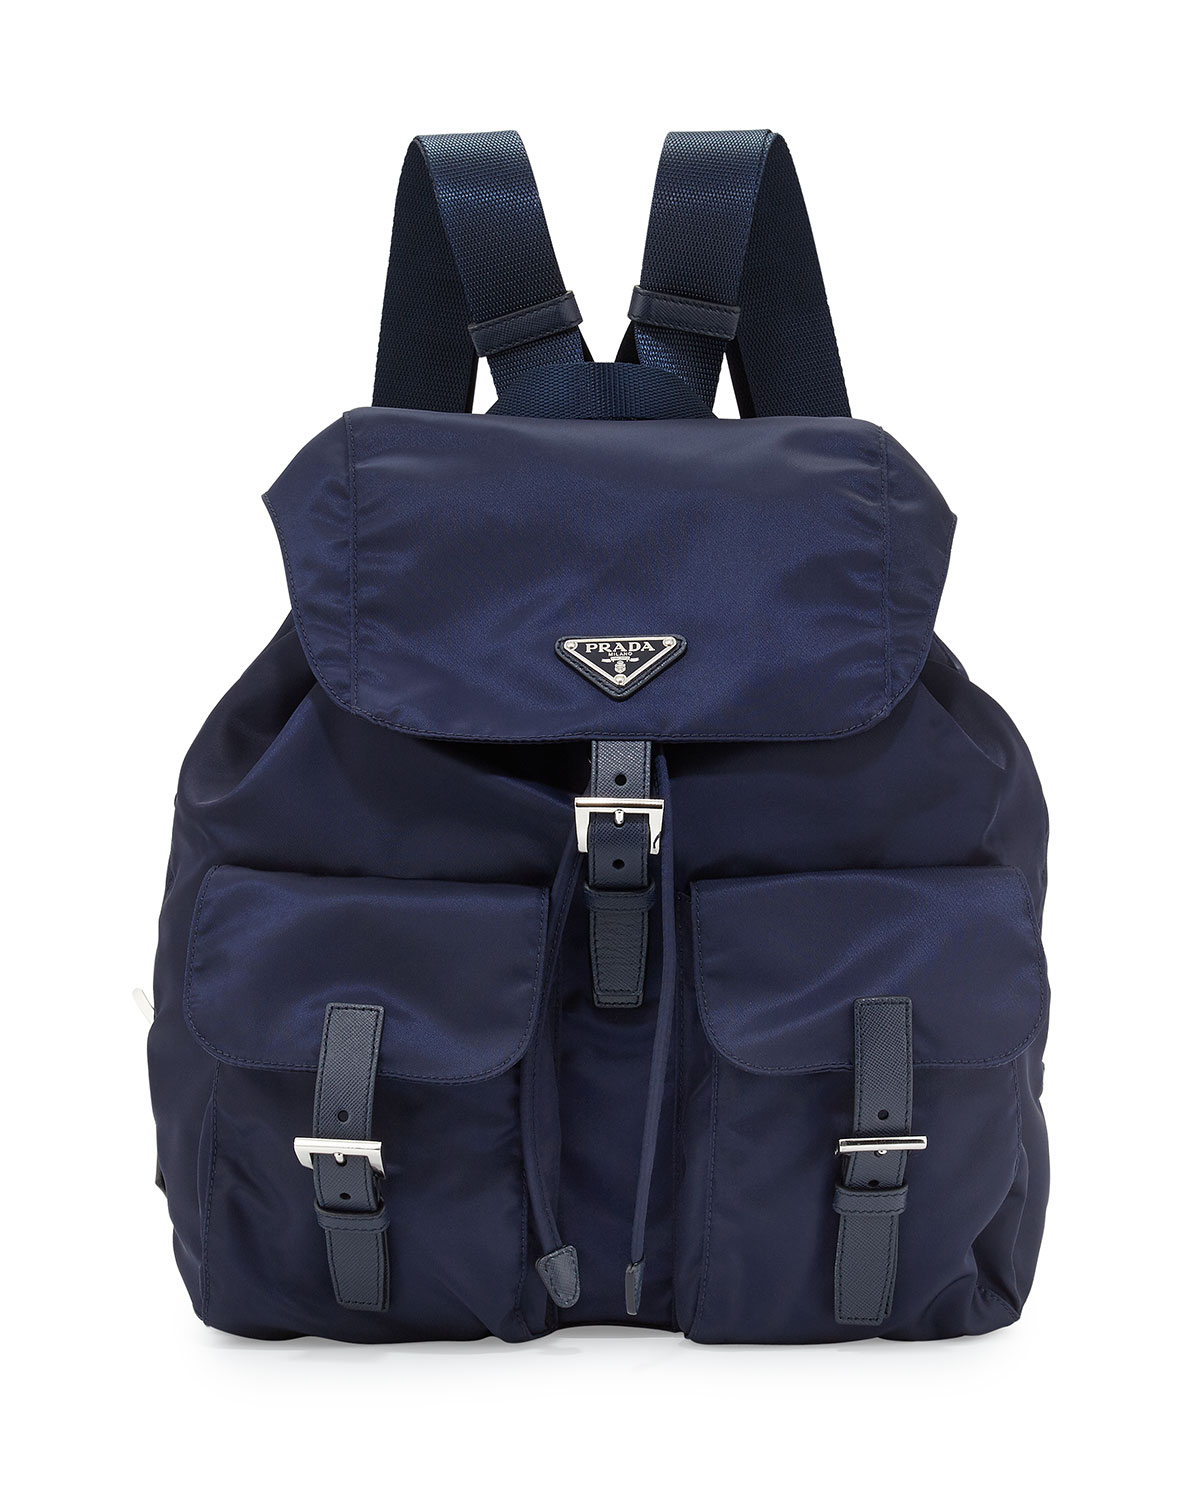 Lyst - Prada Vela Medium Backpack in Blue